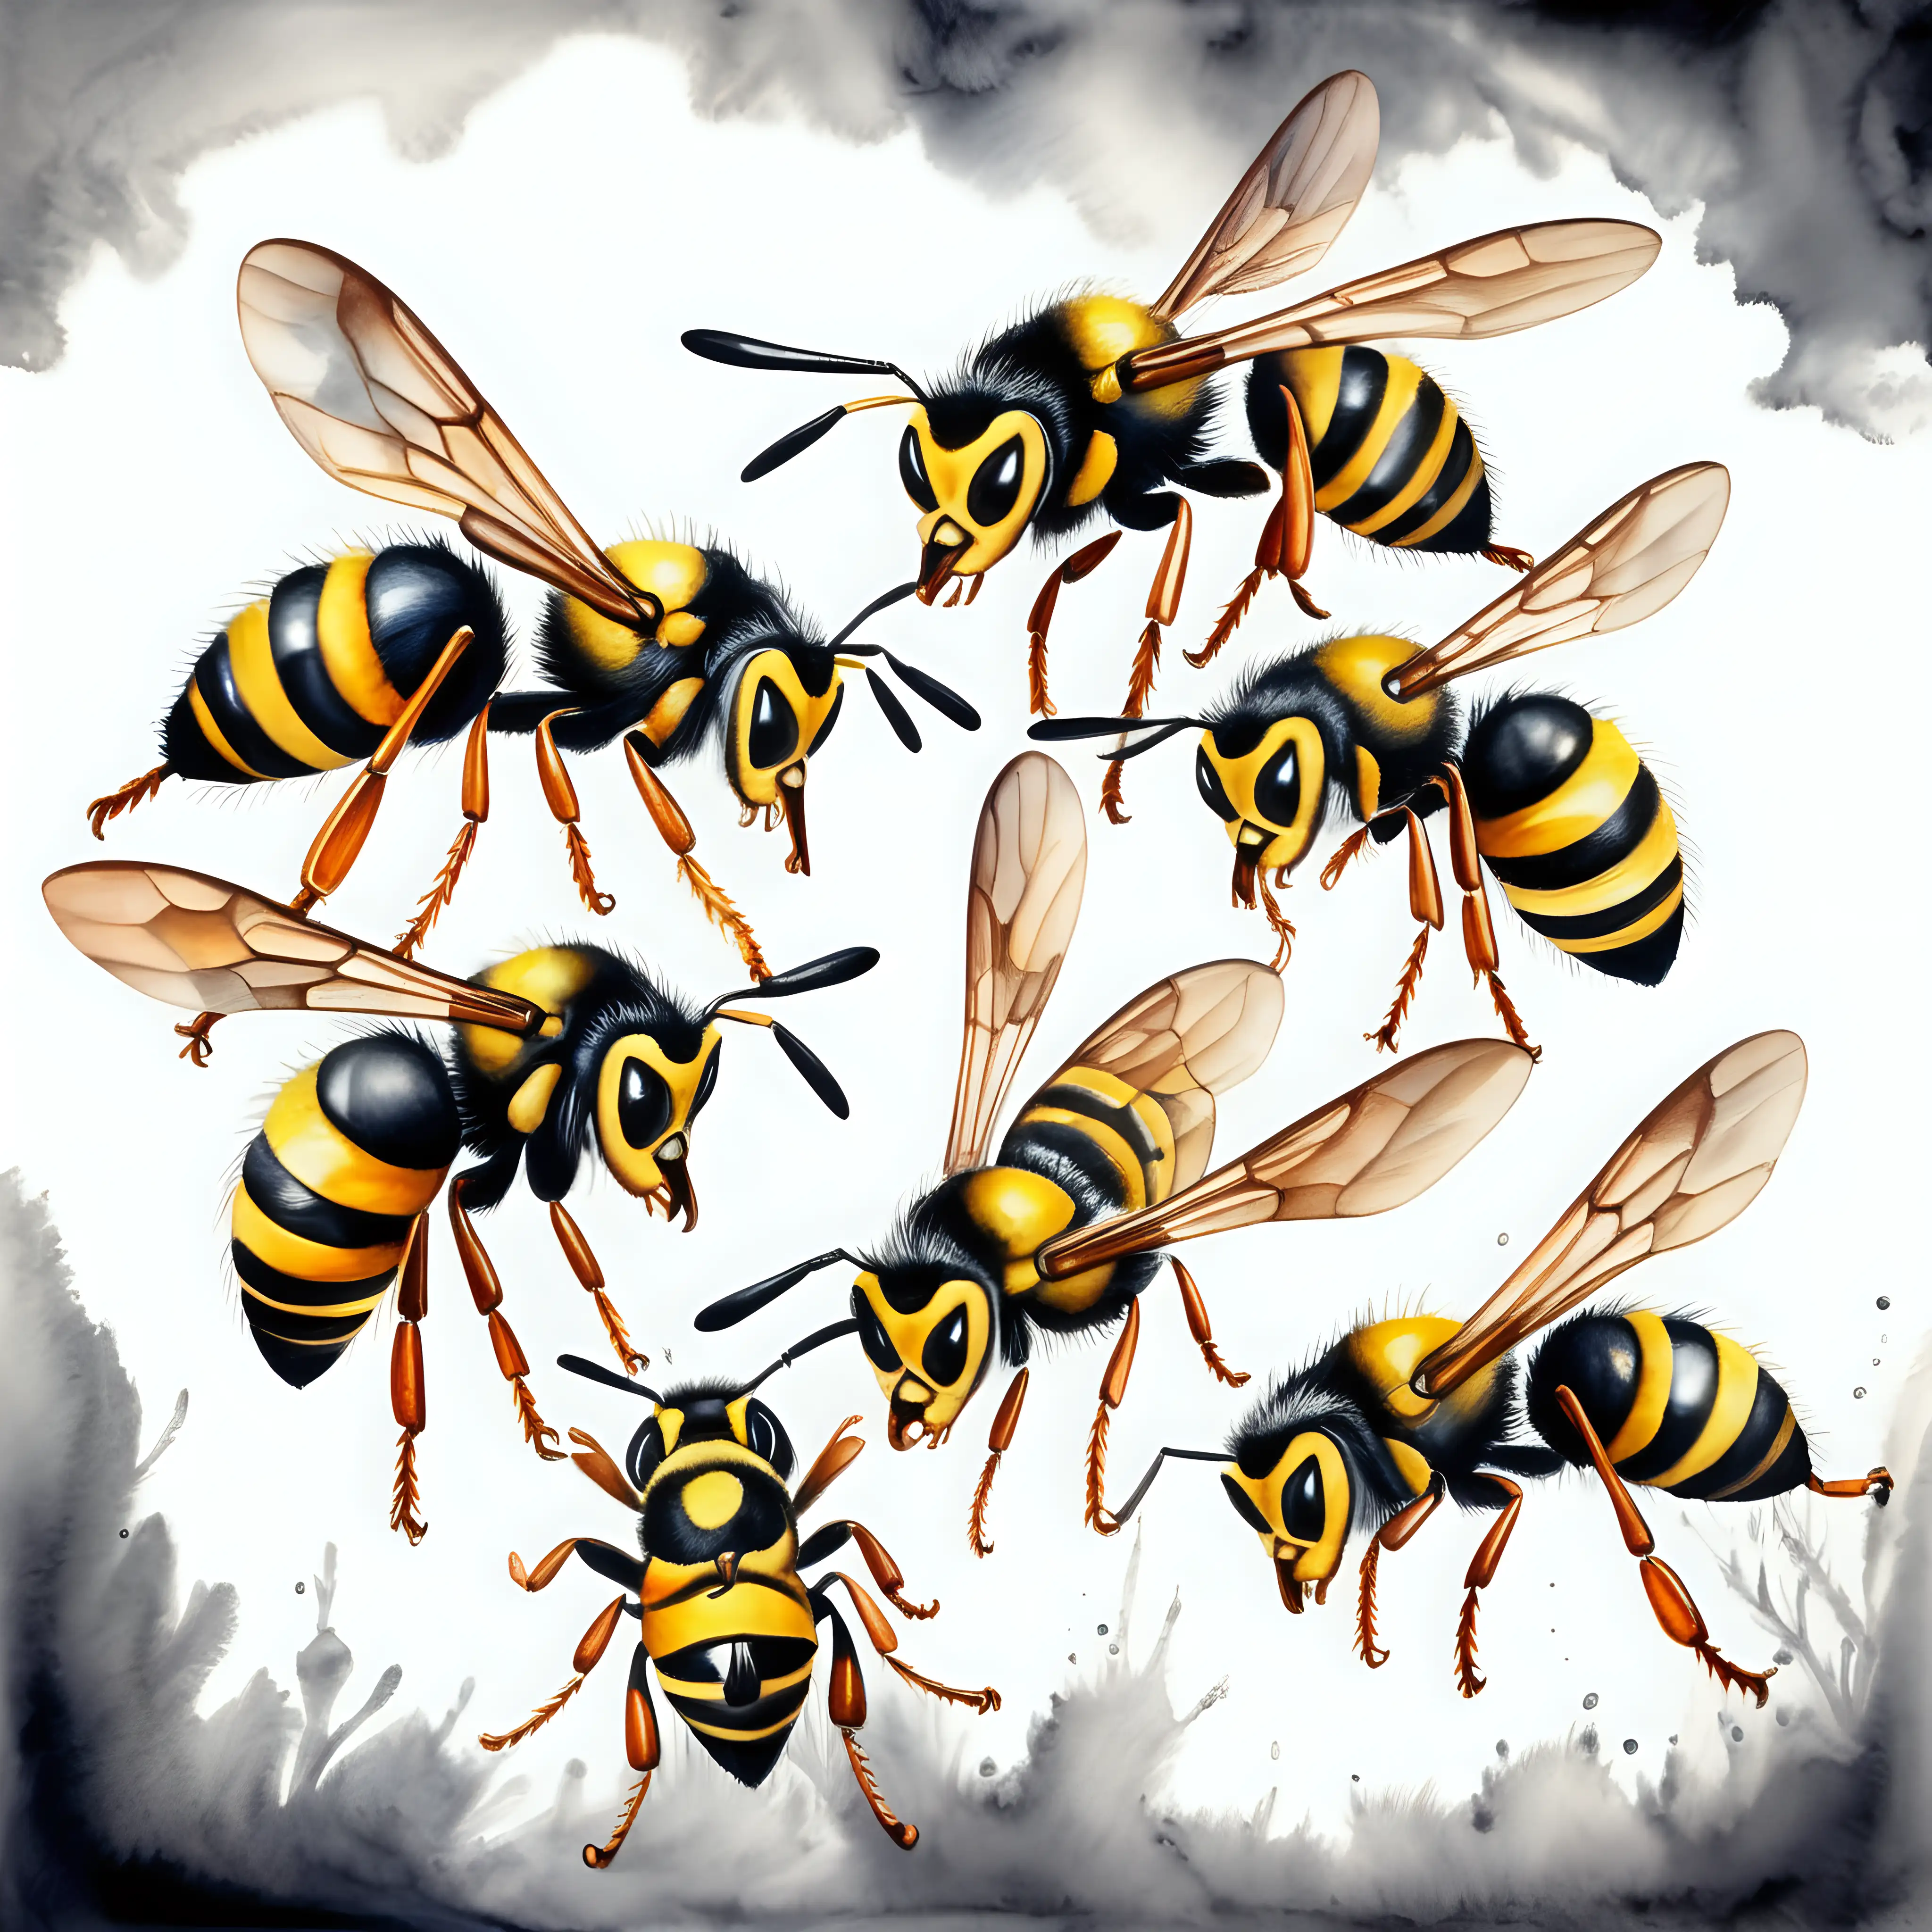 charging swarm of wasps, dark watercolor drawing, no background